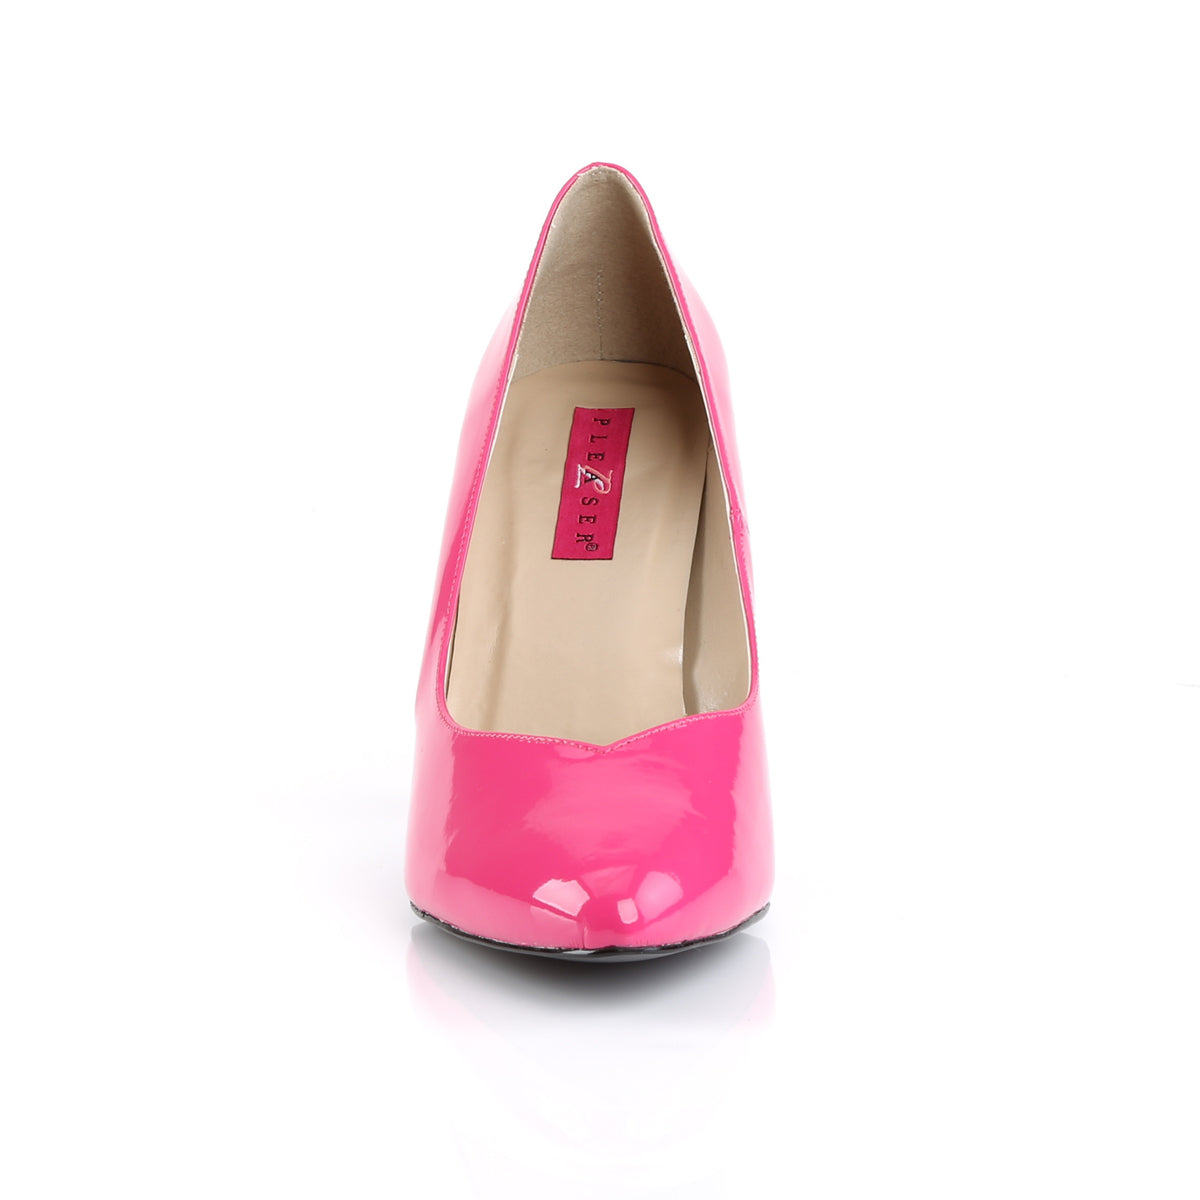 DREAM-420 Pink Label 4" Heel Hot Pink Patent Fetish Footwear-Pleaser Pink Label- Drag Queen Shoes